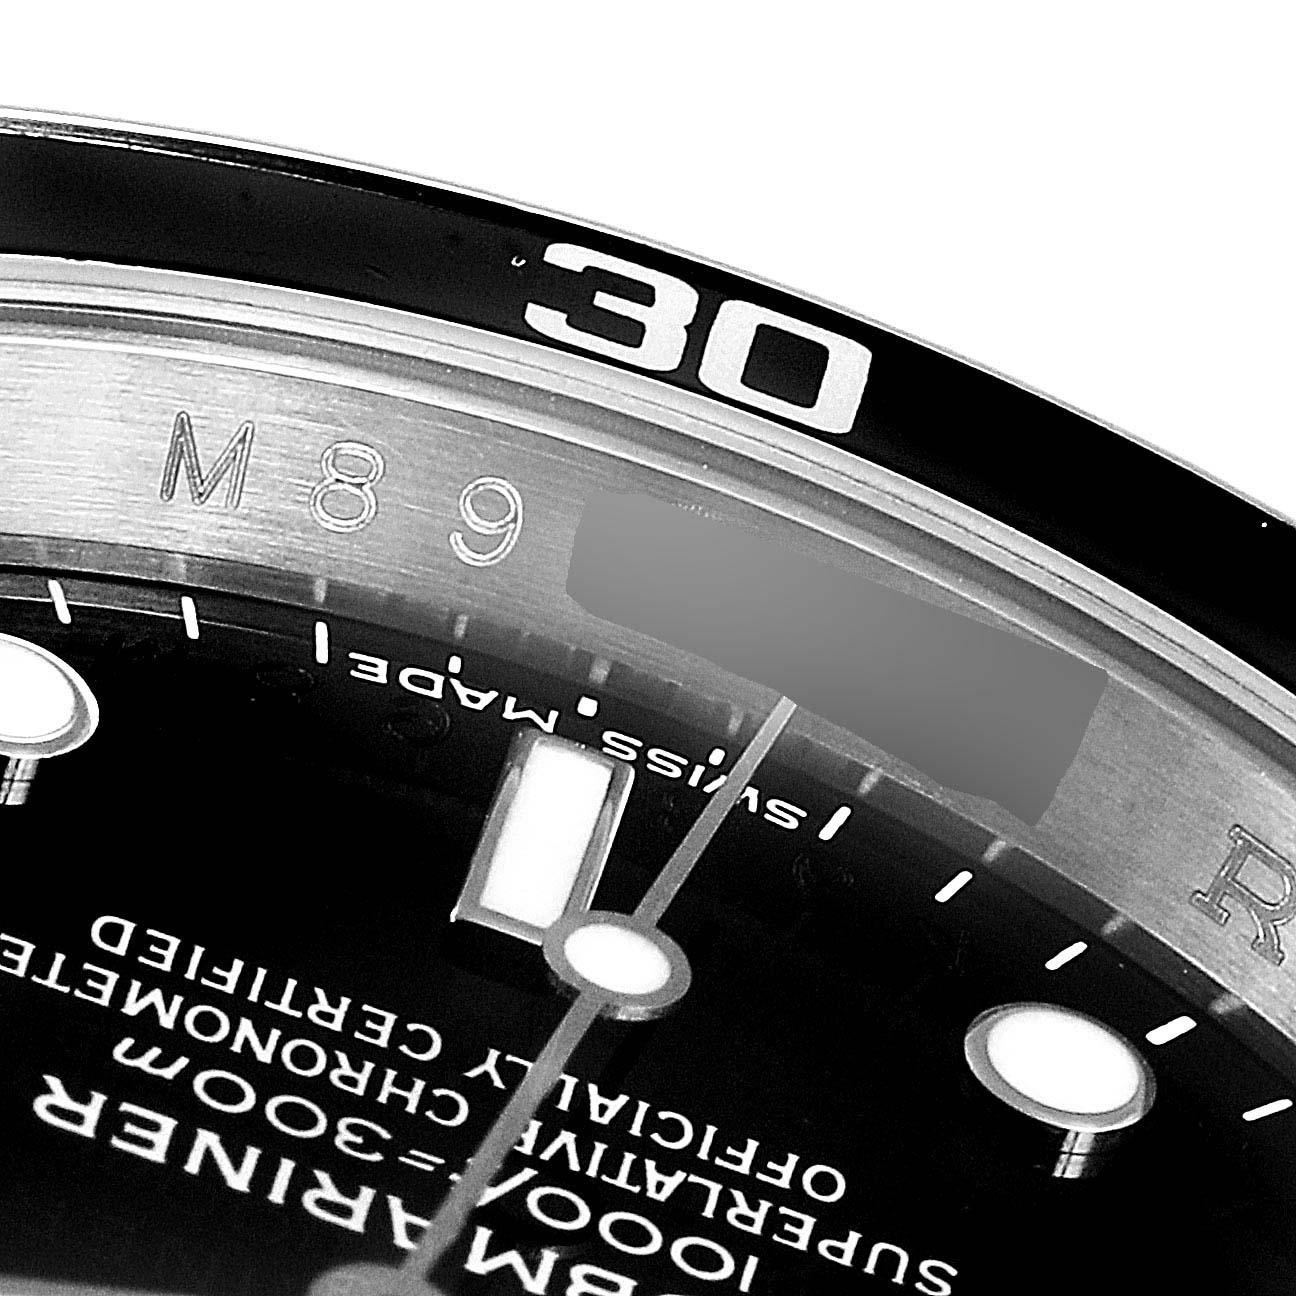 Rolex Submariner Date Stainless Steel Men's Watch 16610 Box Card 3